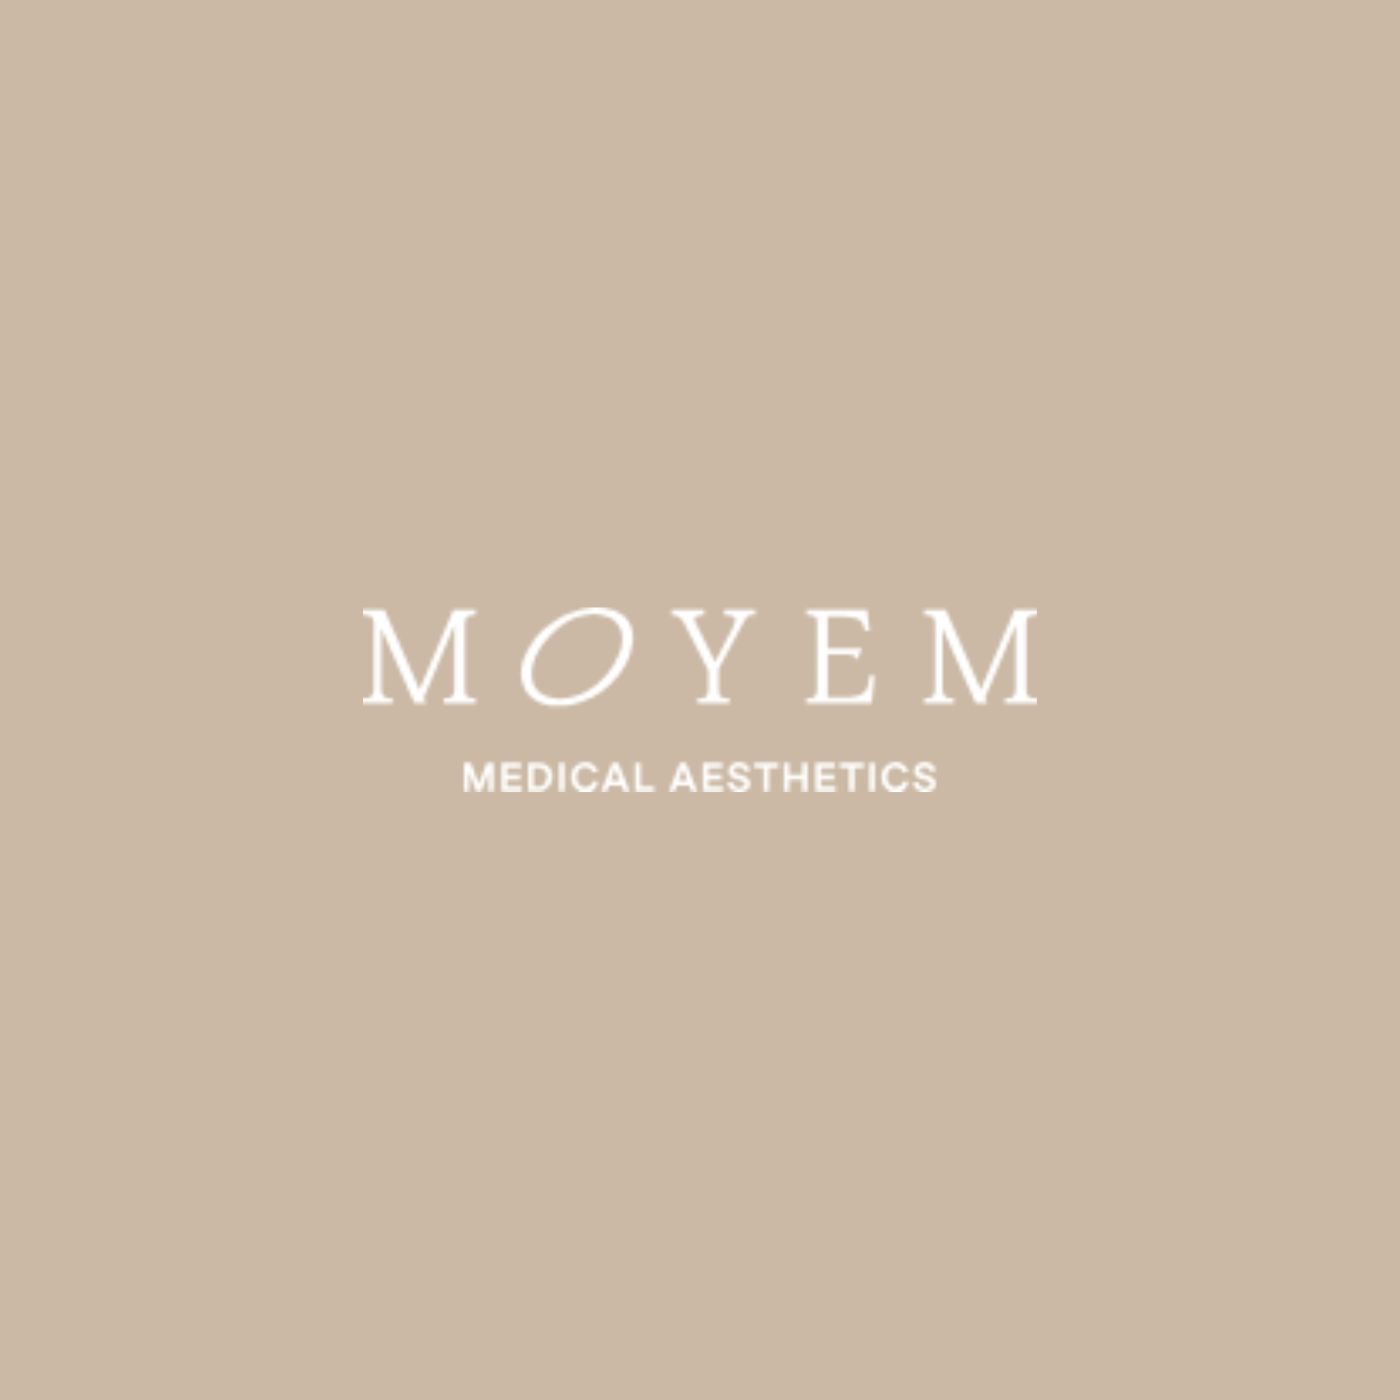 Moyem Medical Aesthetics